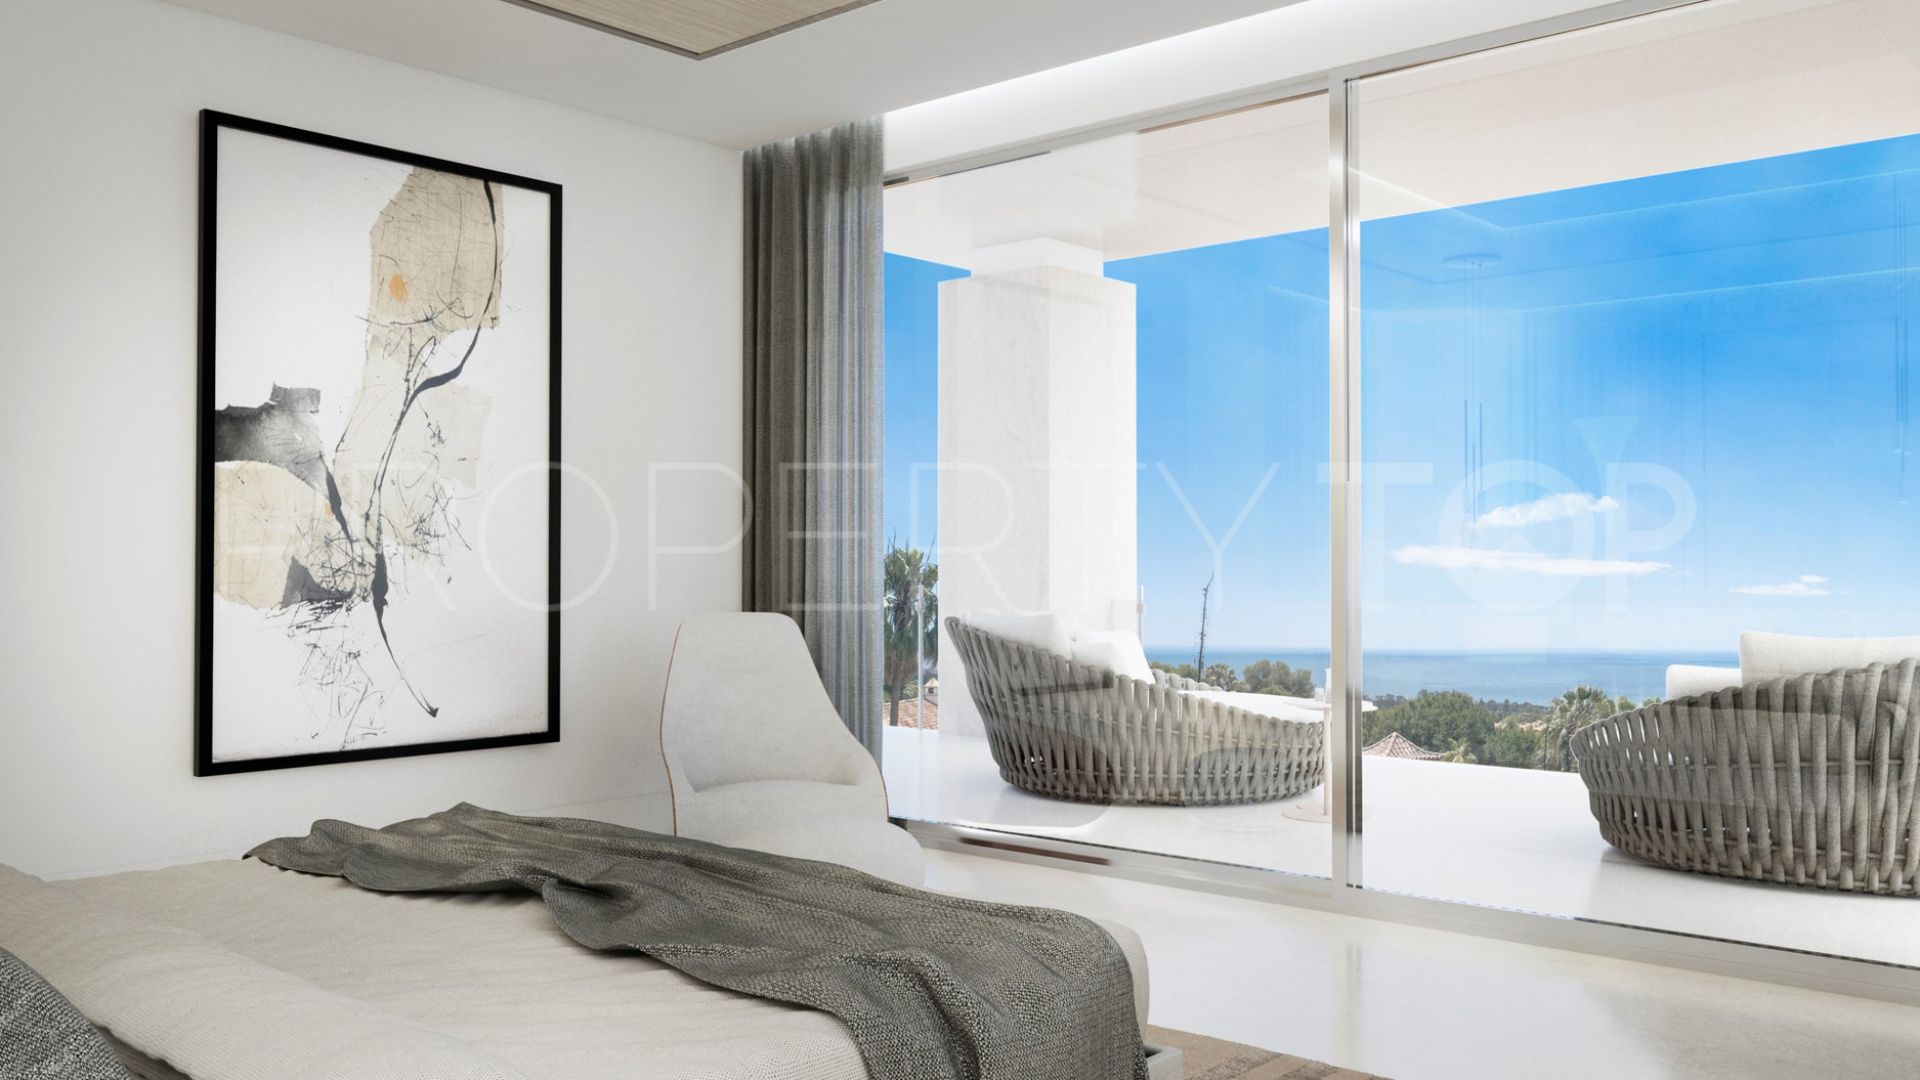 Buy Sierra Blanca villa with 5 bedrooms